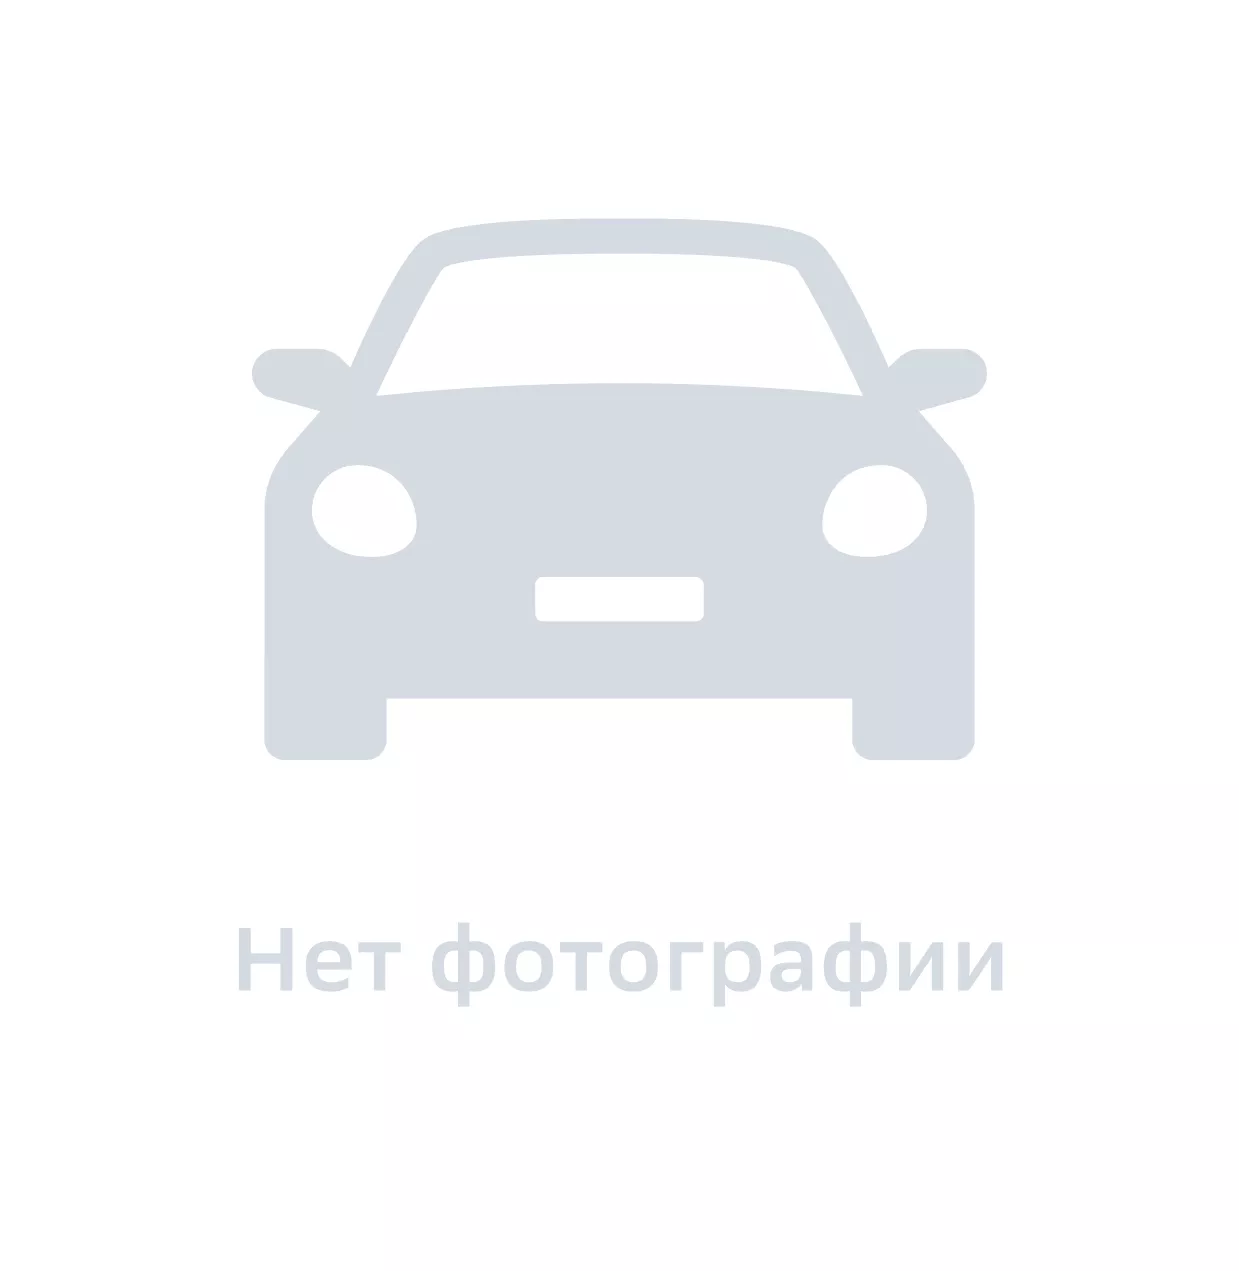 Коллектор выпускной левый, Hyundai-KIA, арт. 2850037530, цена за 1 шт.